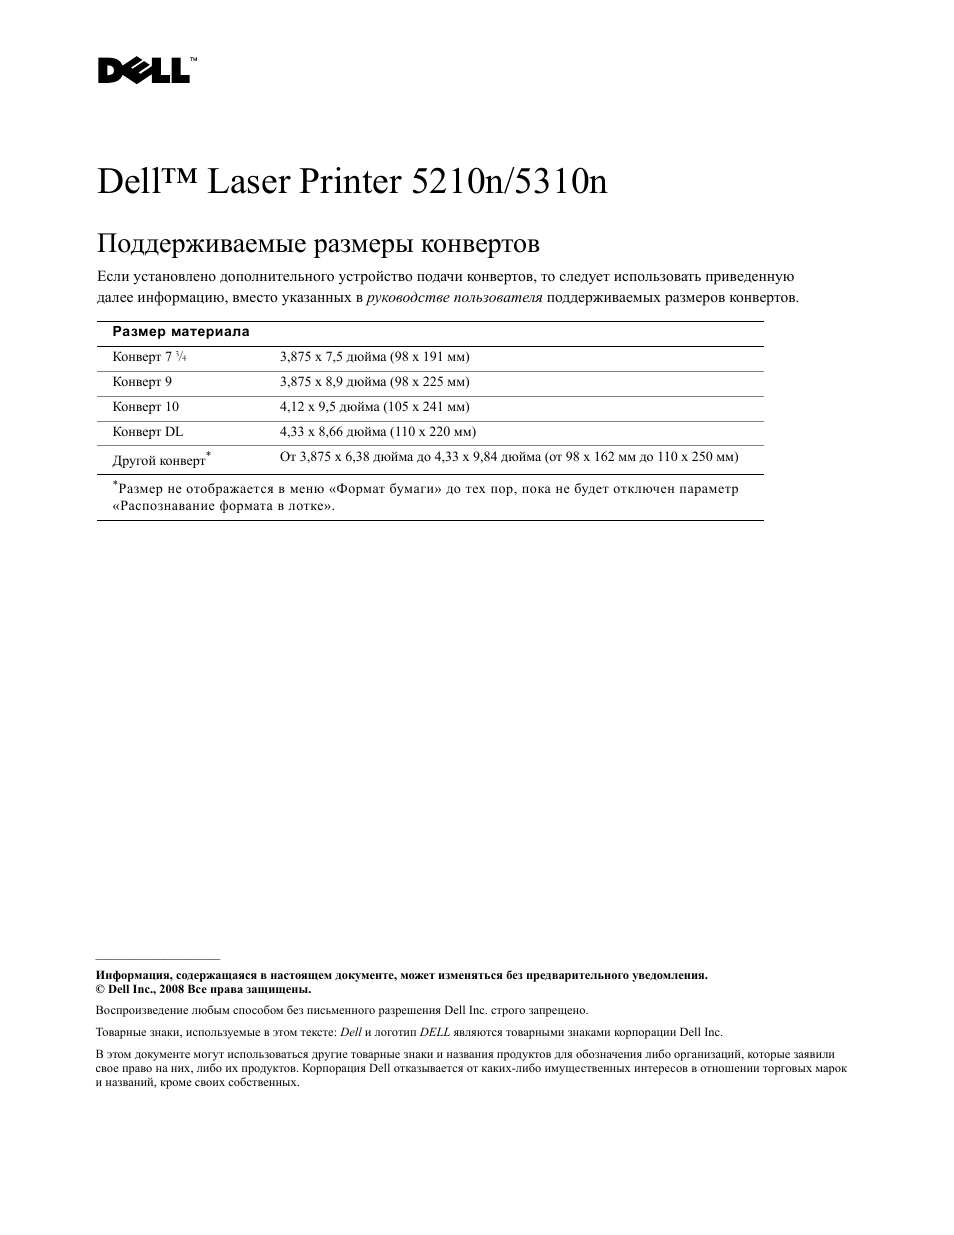 Инструкция по эксплуатации Dell 5210n Mono Laser Printer | 1 cтраница